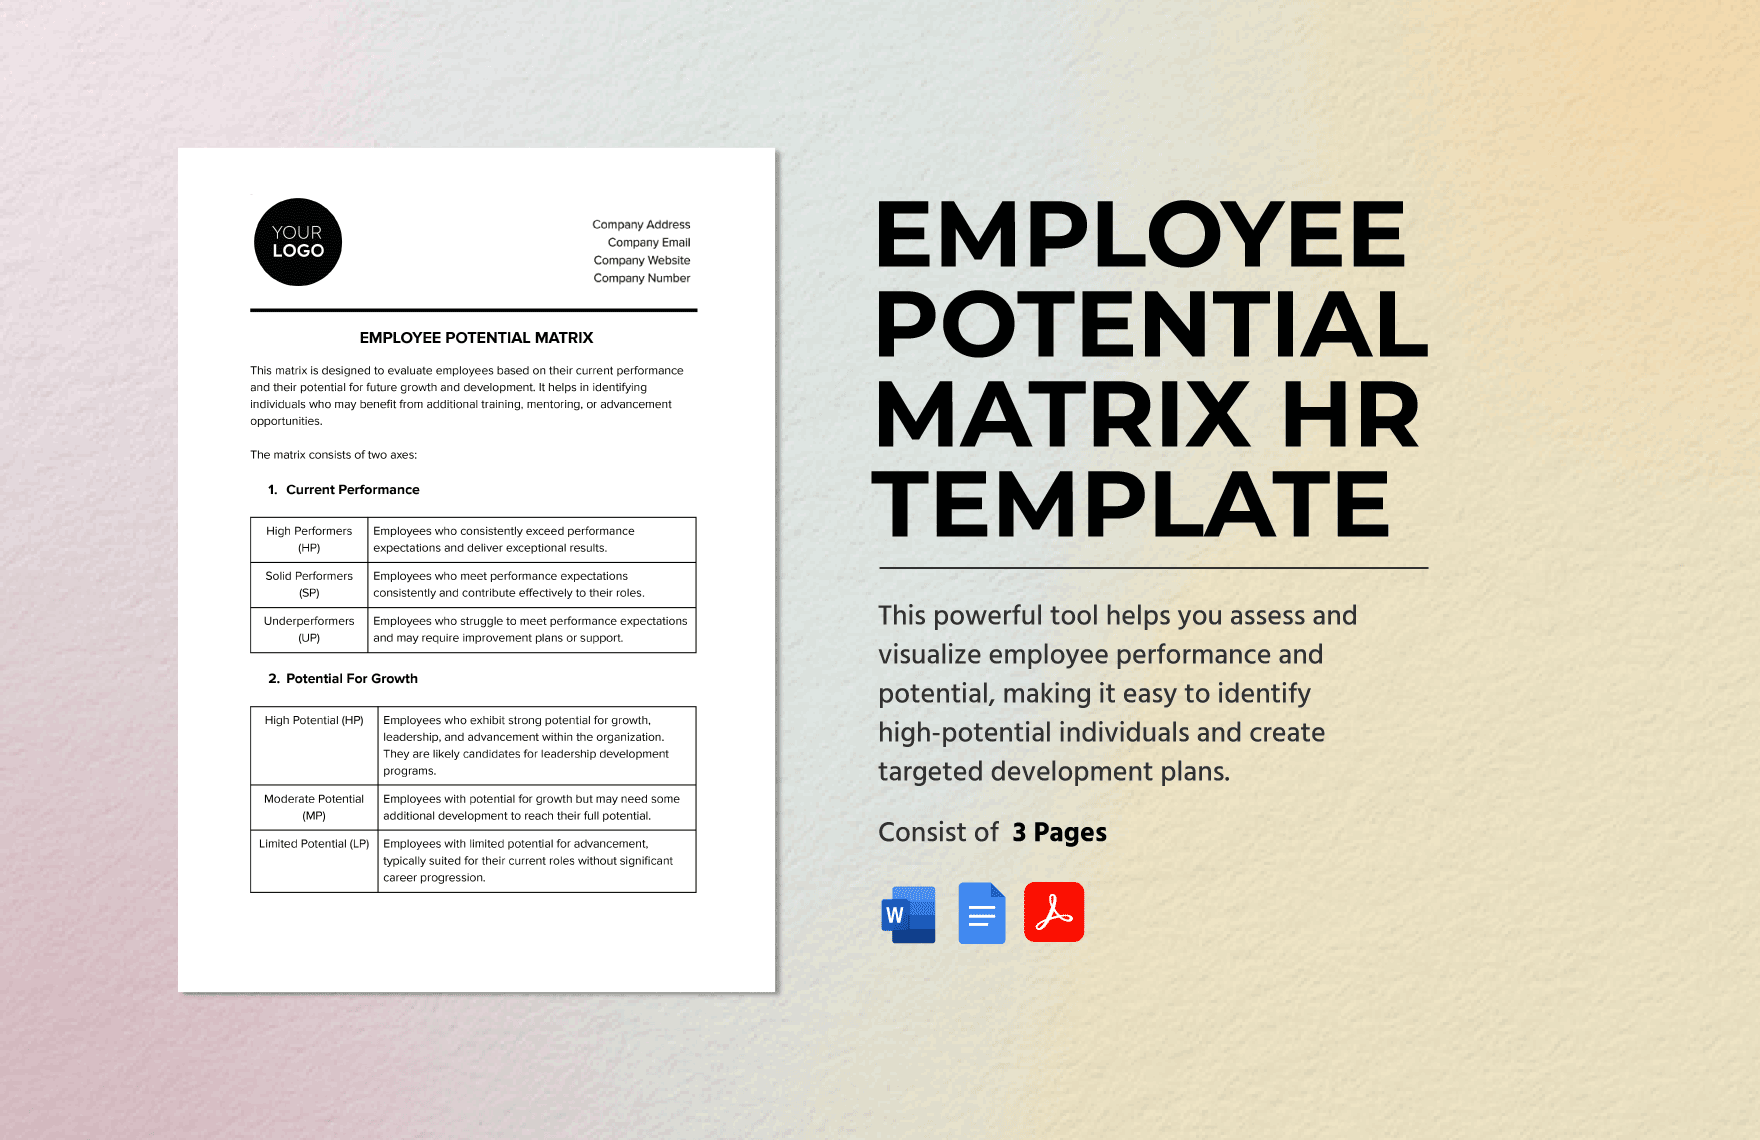 Employee Potential Matrix HR Template